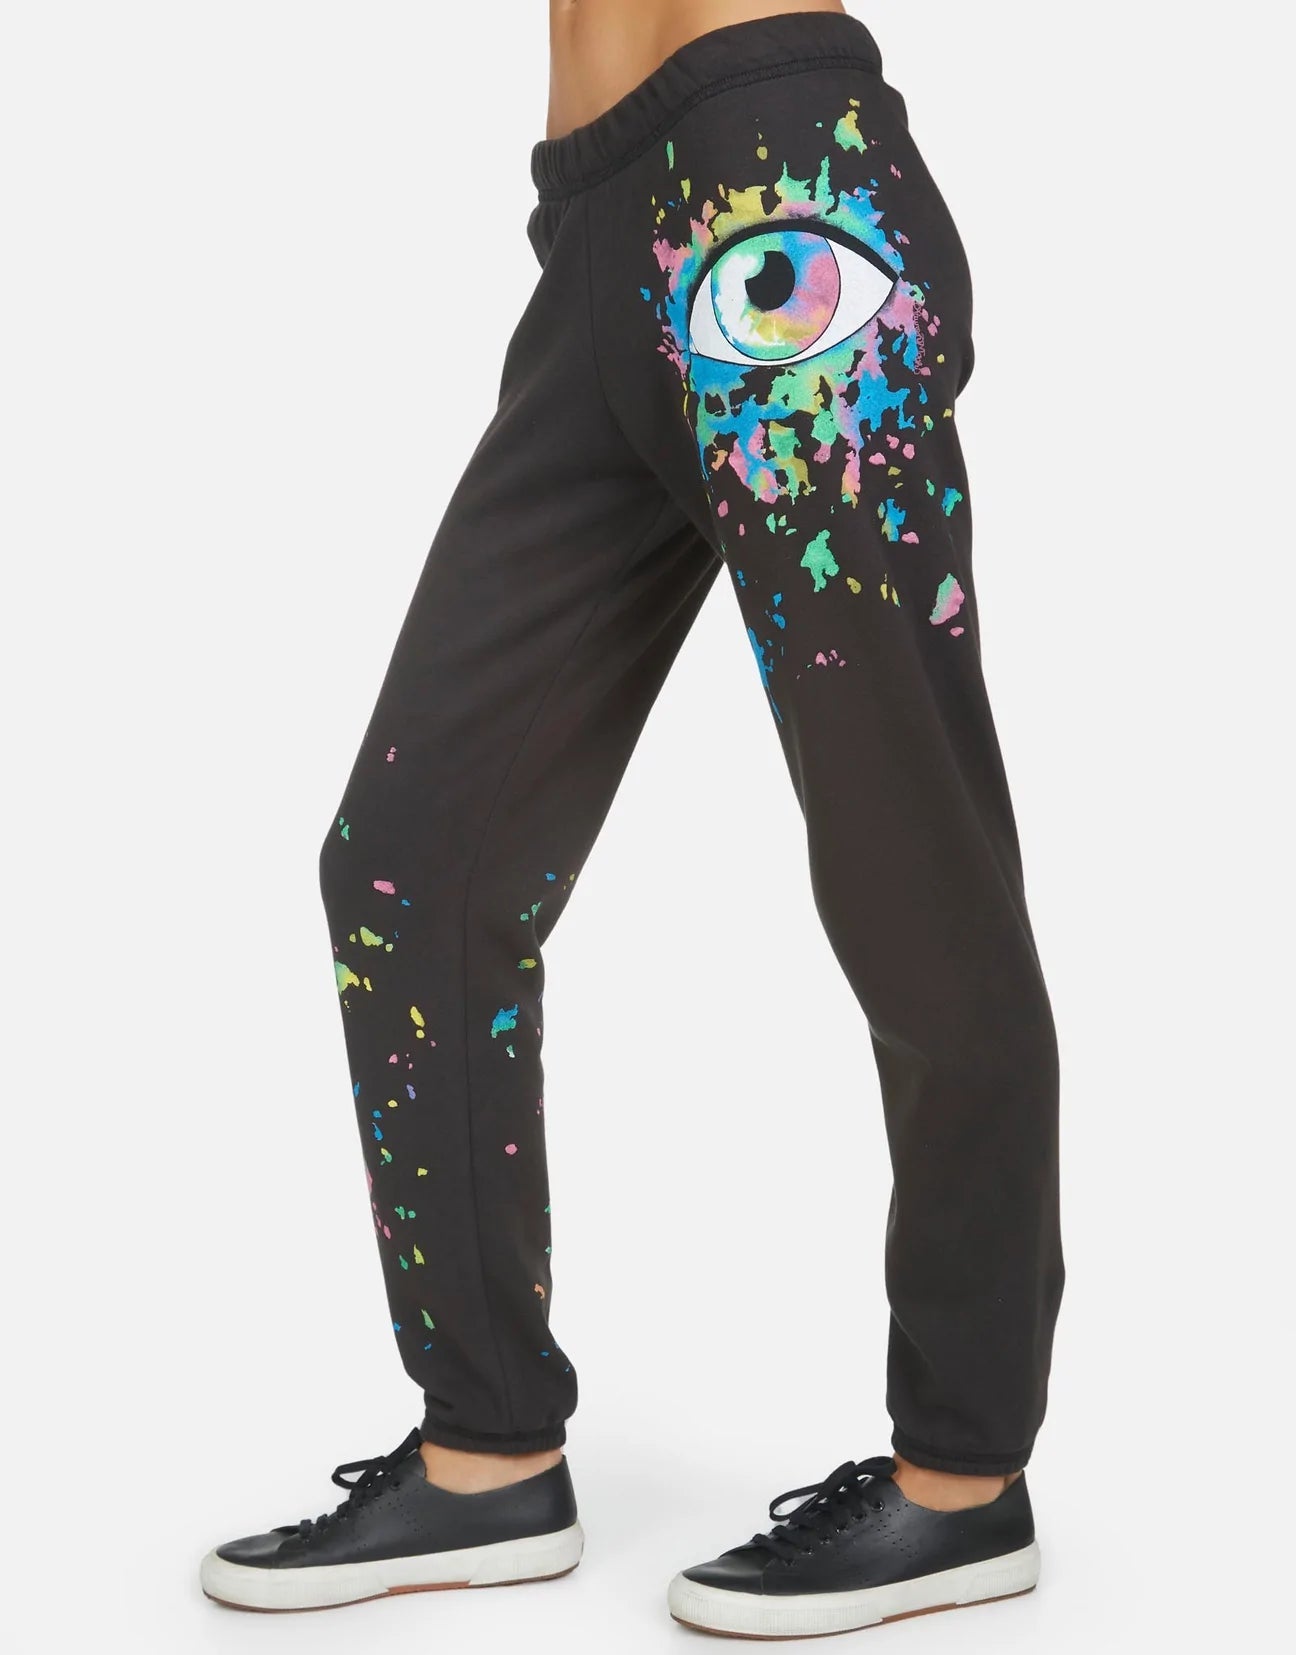 Shop Lauren Moshi Brynn Watercolor Eye Sweatpants - Premium Joggers from Lauren Moshi Online now at Spoiled Brat 